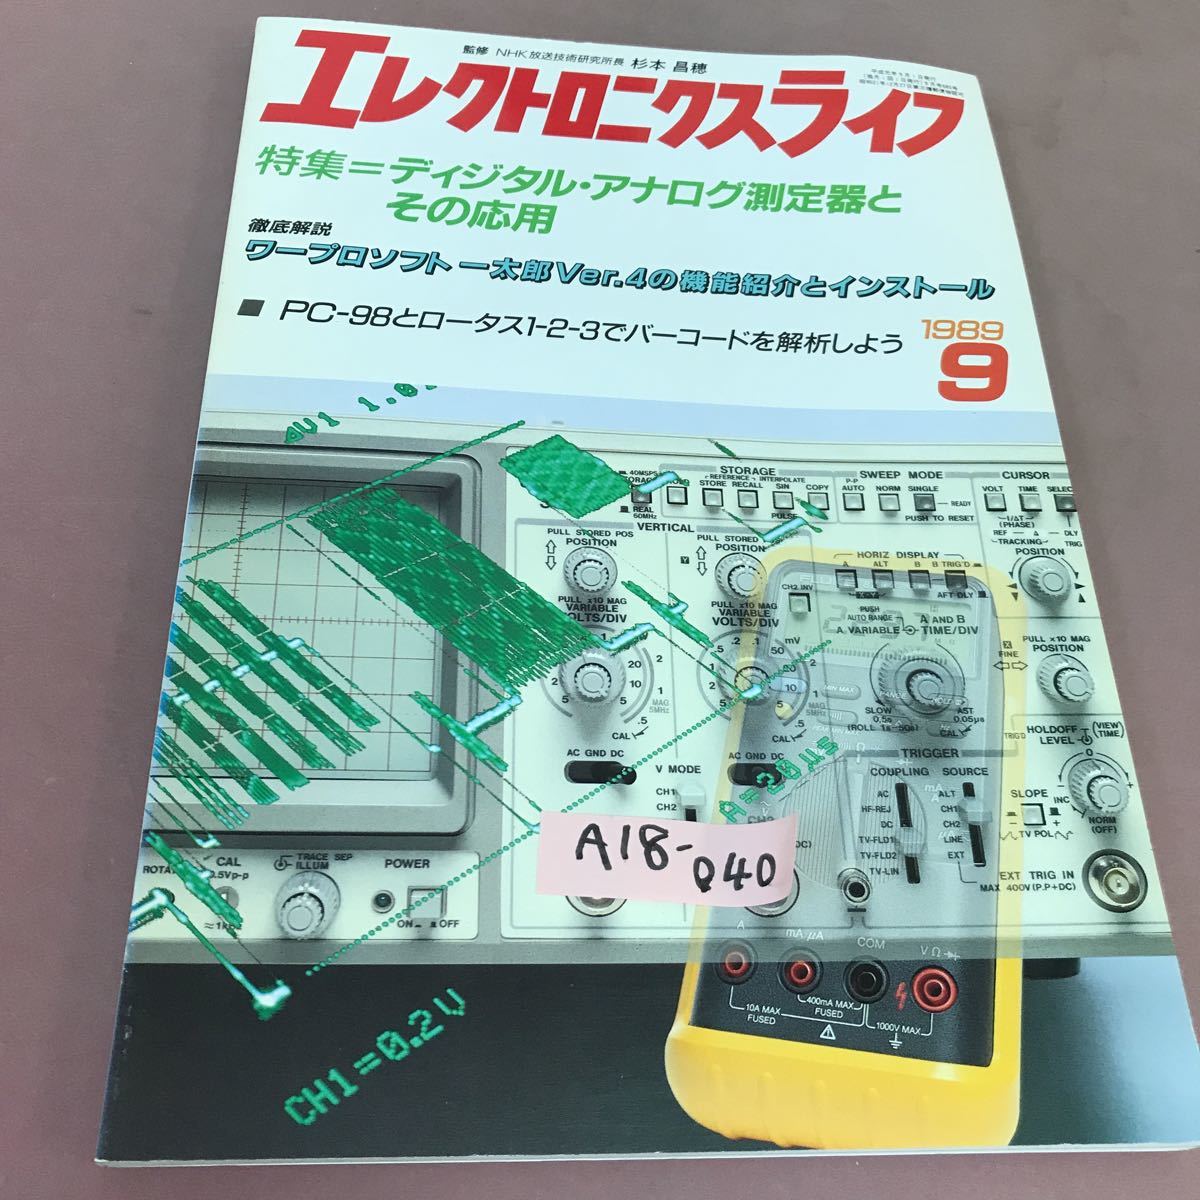 A18-040 エレクトロニクスライフ 1989.9 特集 ディジタル・アナログ測定器とその応用 日本放送出版協会